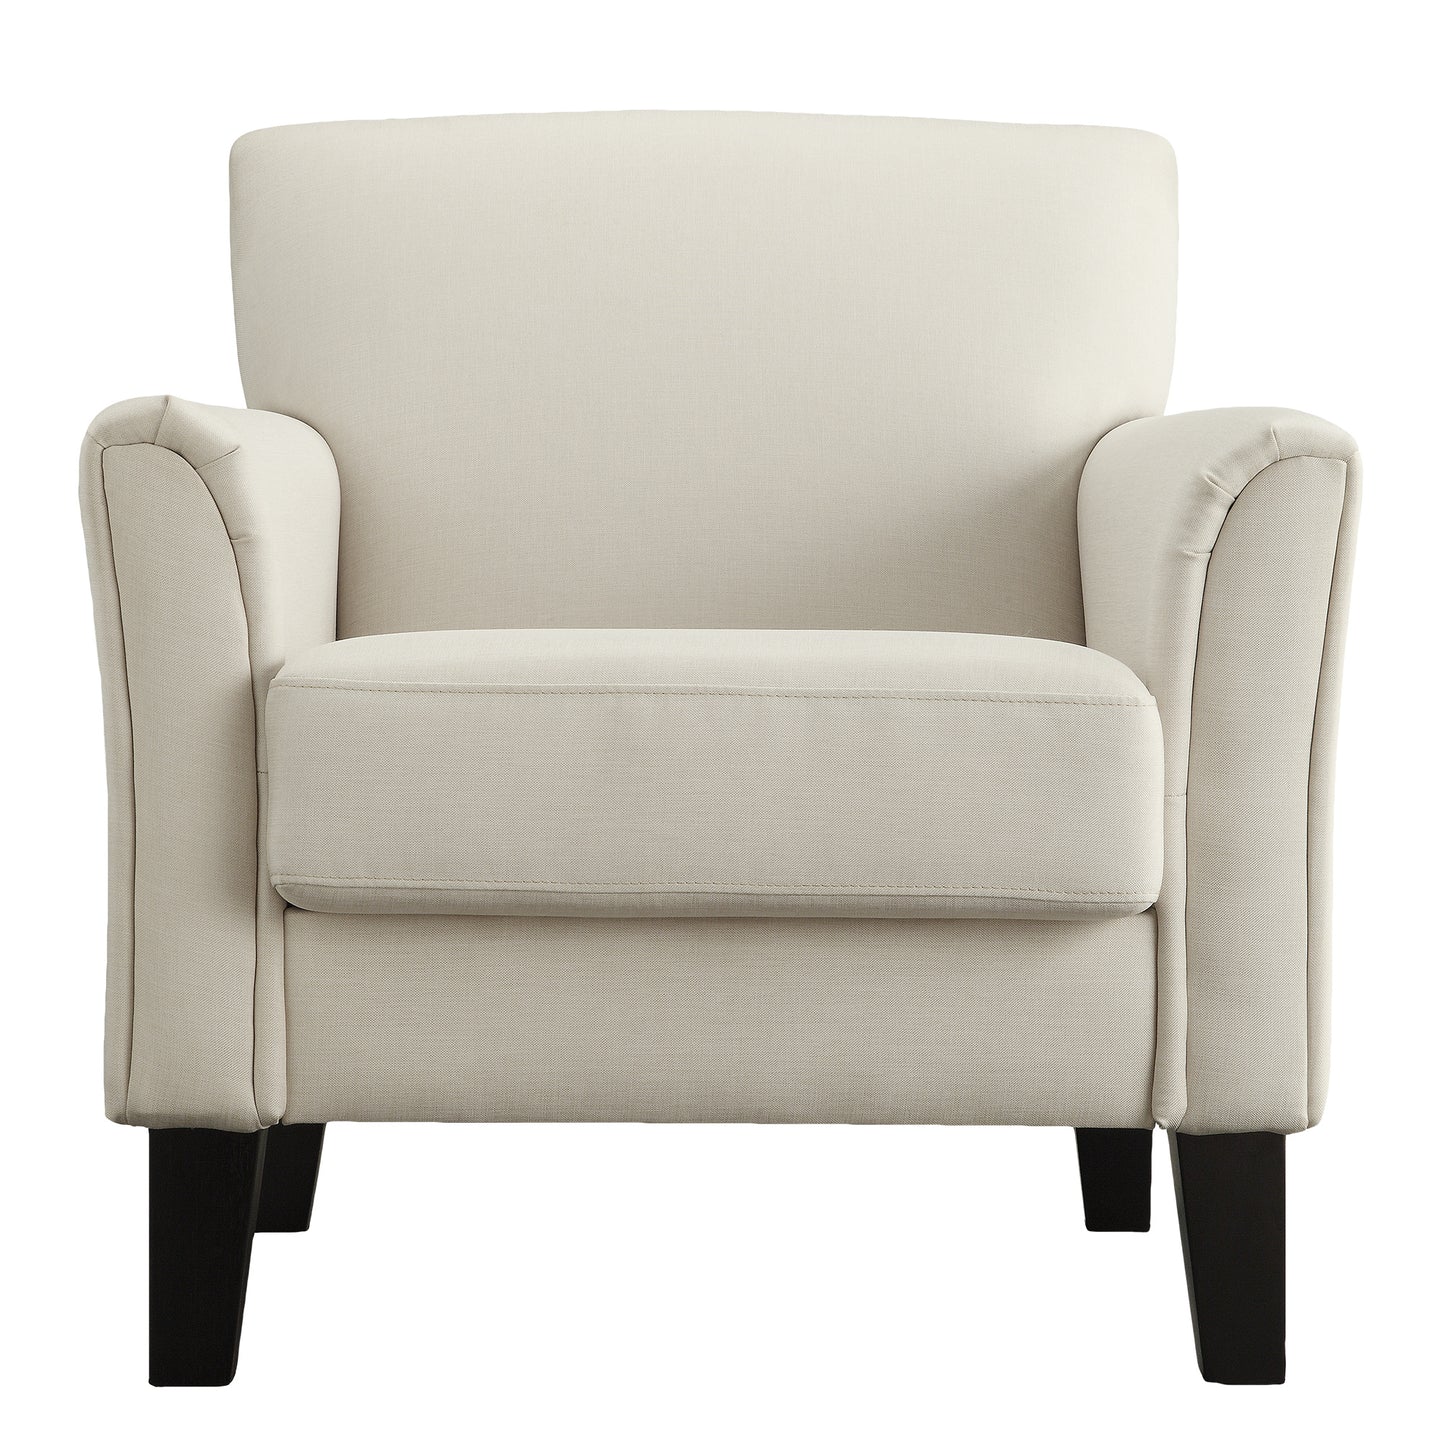 Modern Accent Chair - White Linen